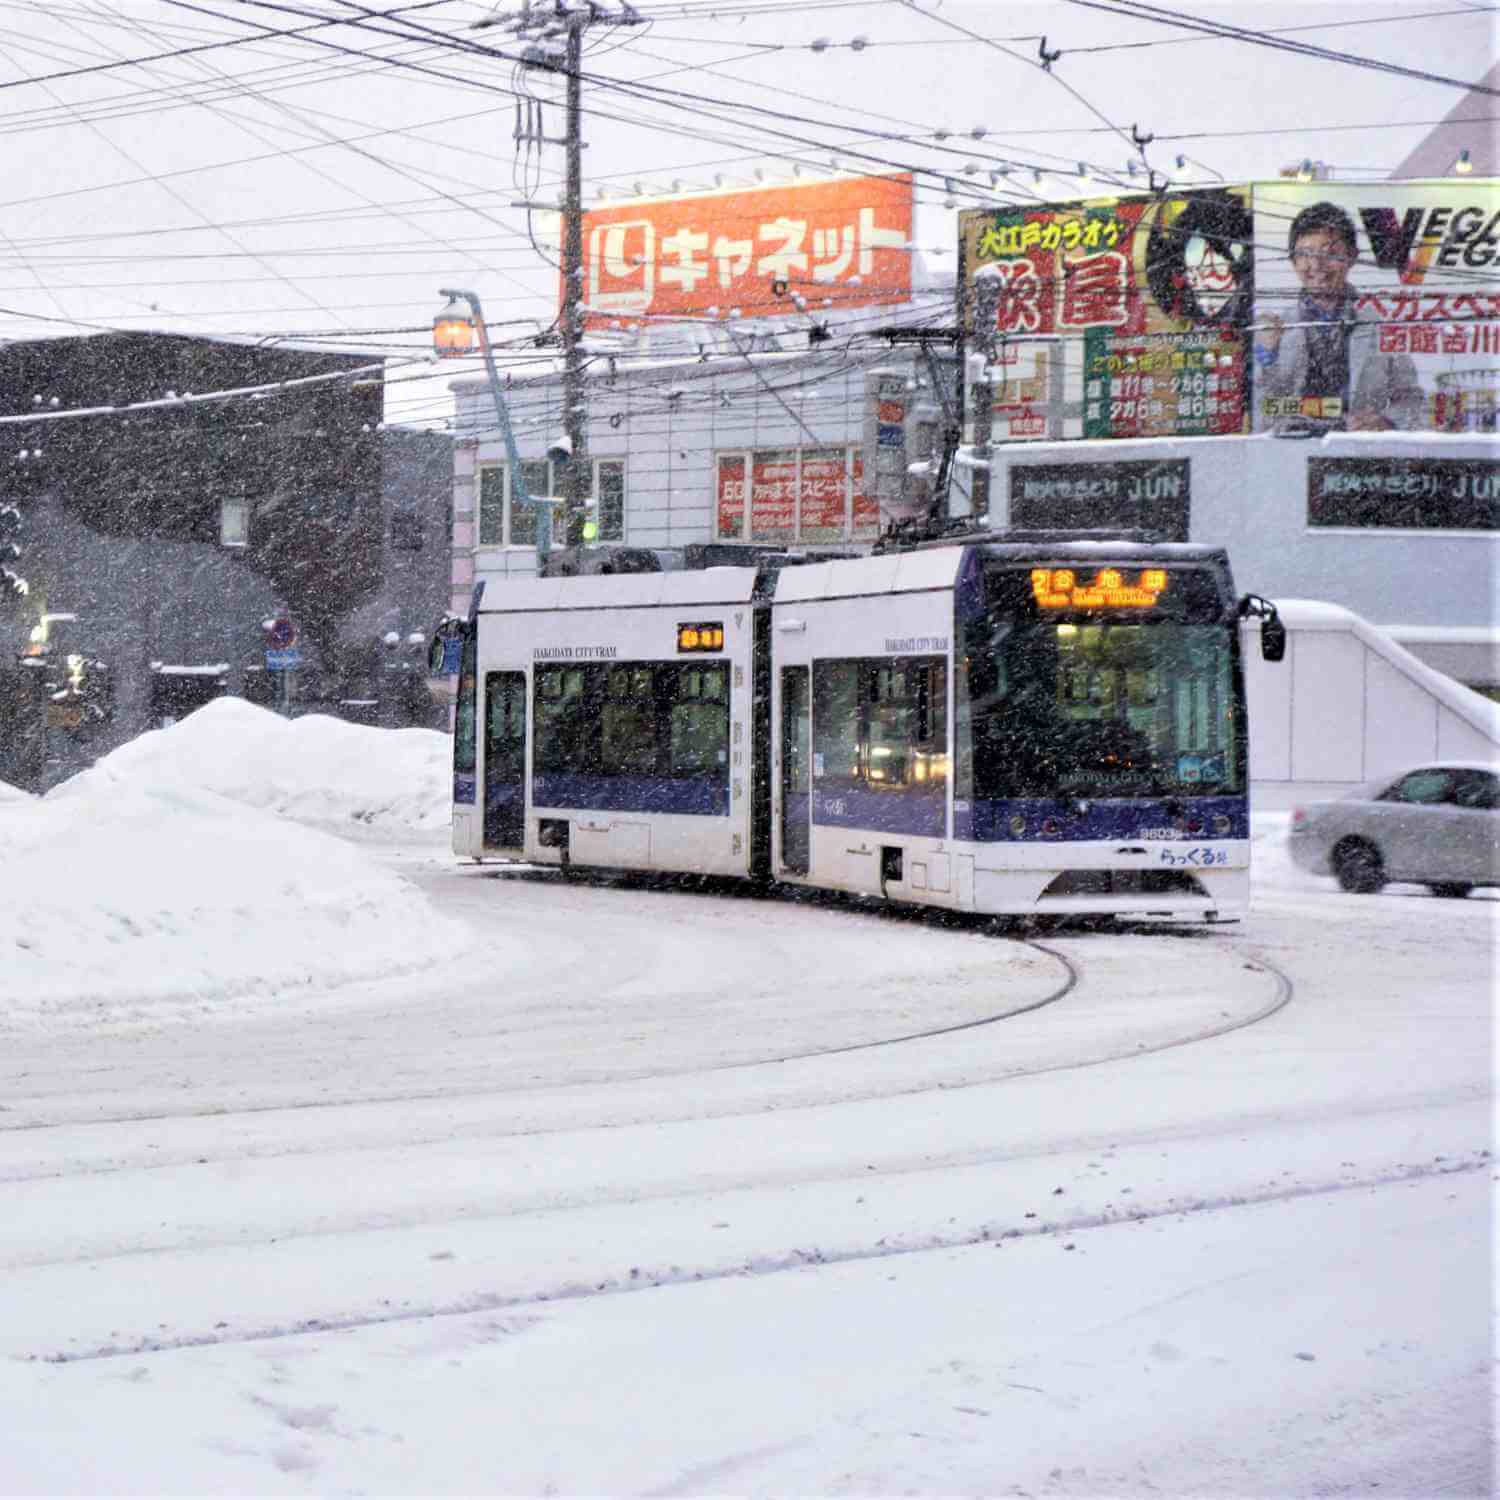 City tram running in Hakodate city = Shutterstock